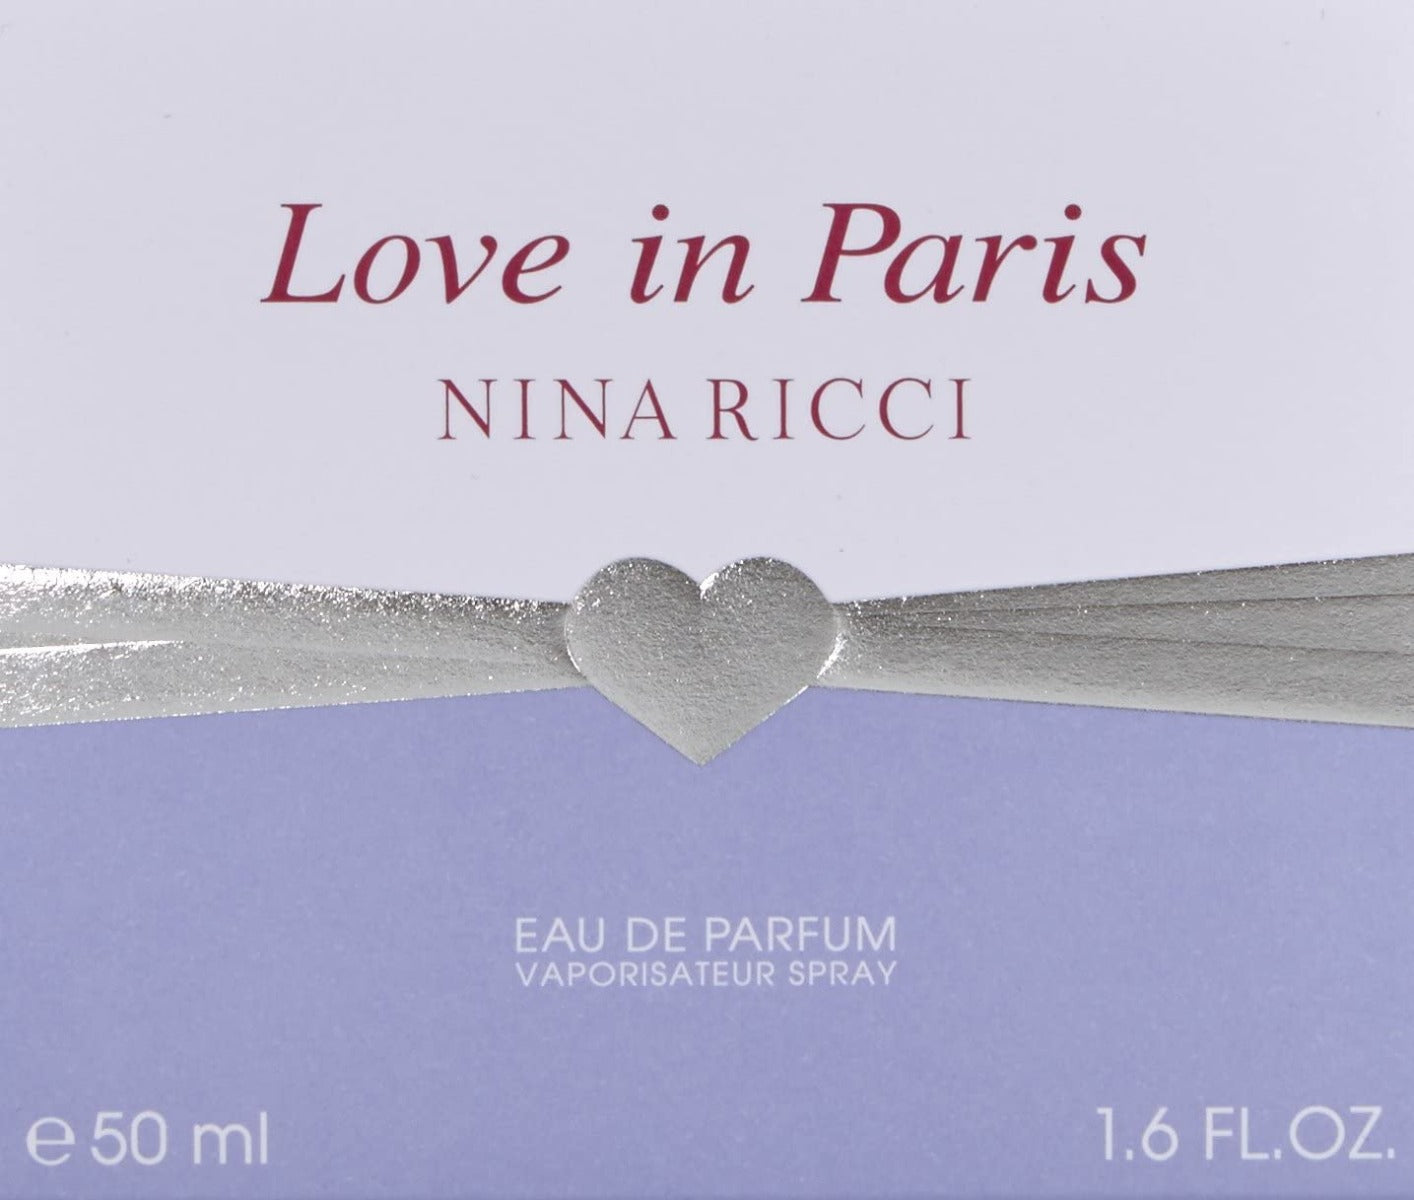 Love in Paris Nina Ricci Eau de Parfum Spray - 50 ml - samawa perfumes 